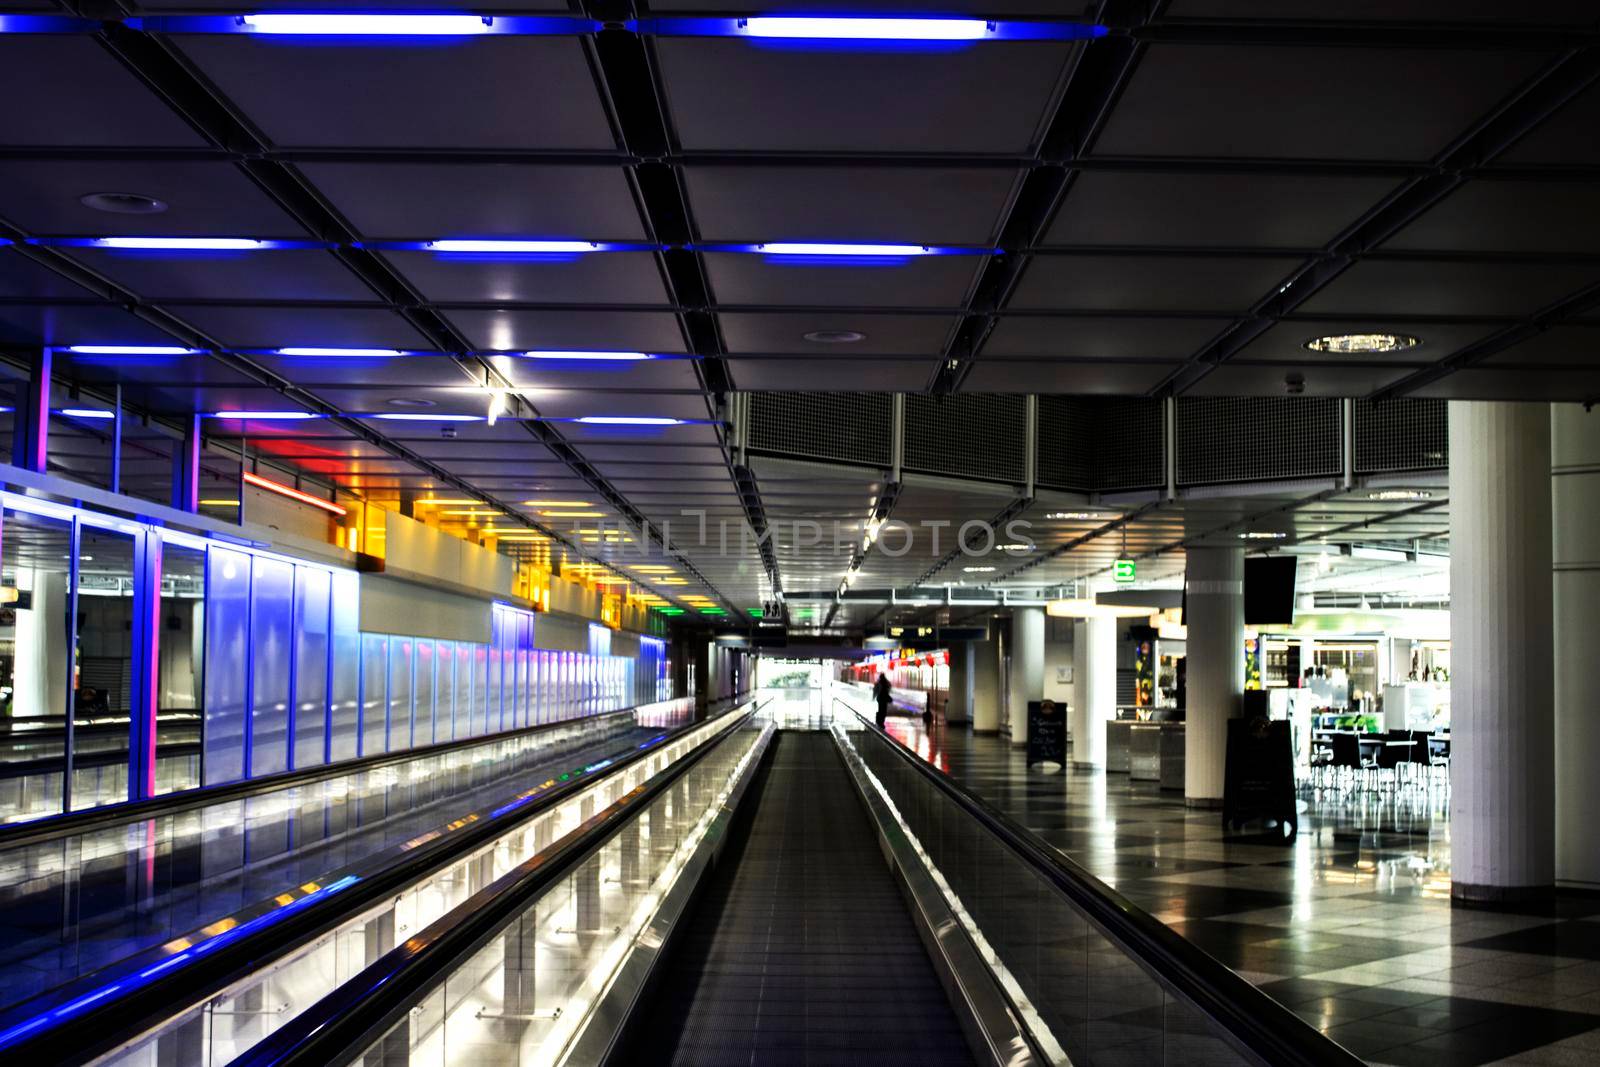 Corridor in an airport by ValentimePix